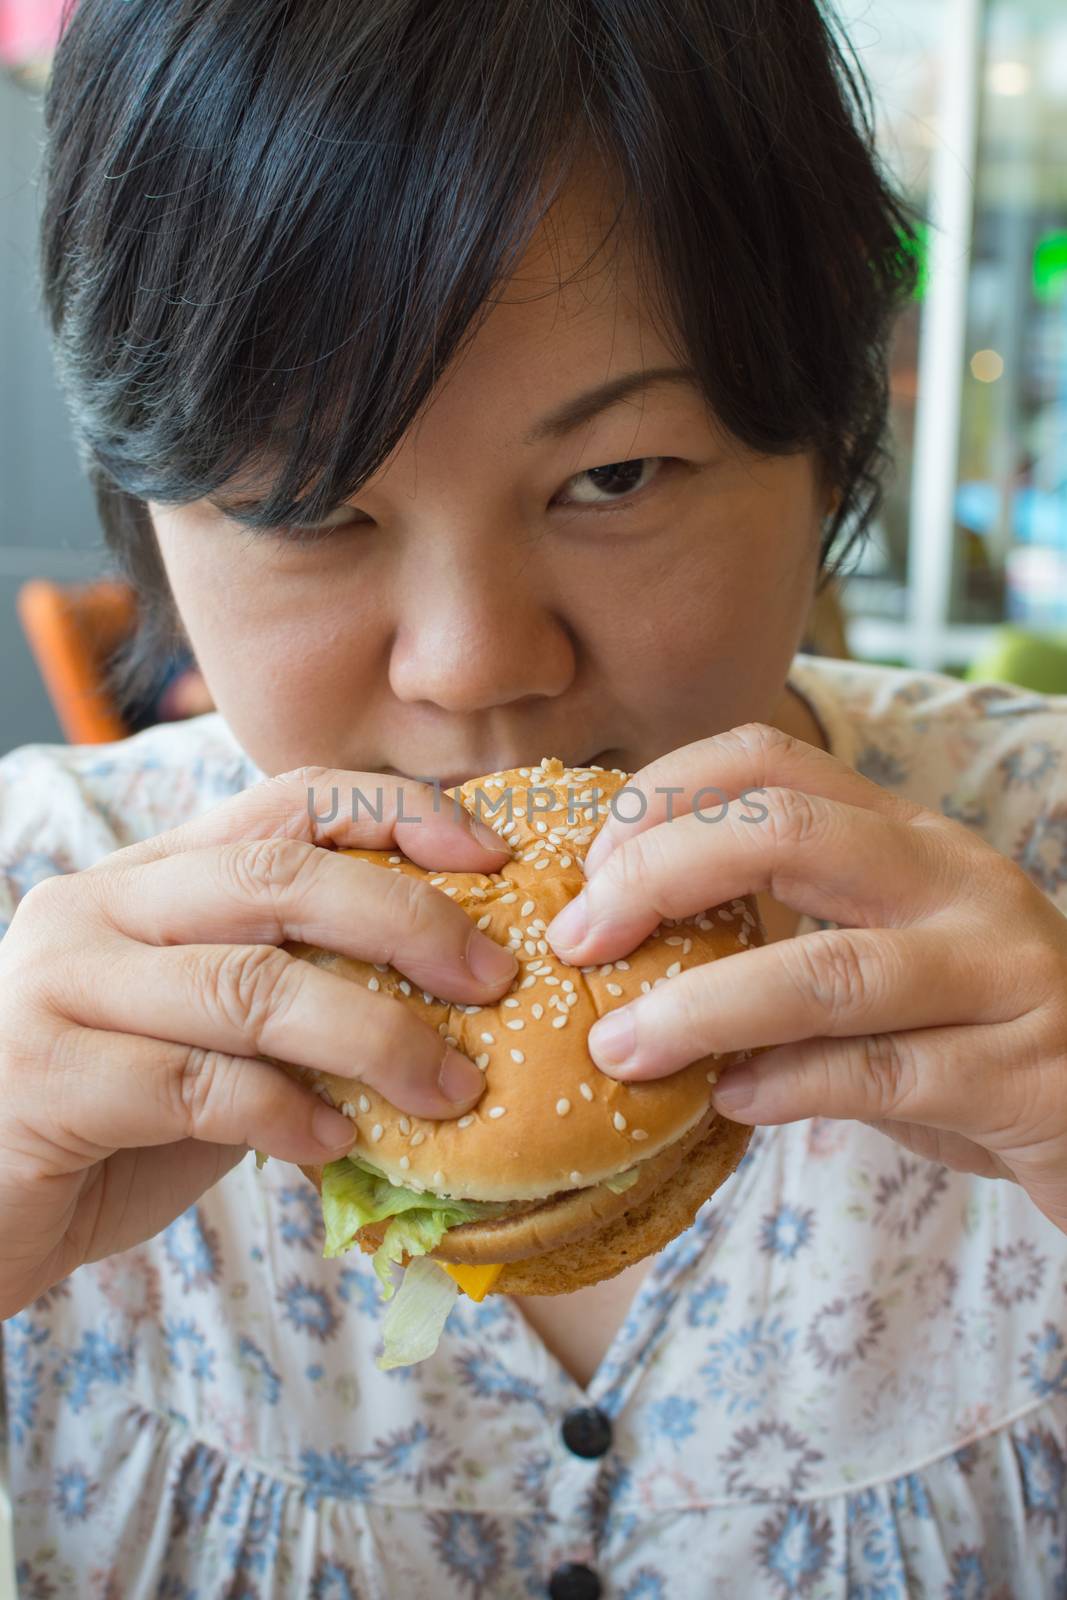 Asia woman plump body eating a hamburger is a unhealthy food at fastfood